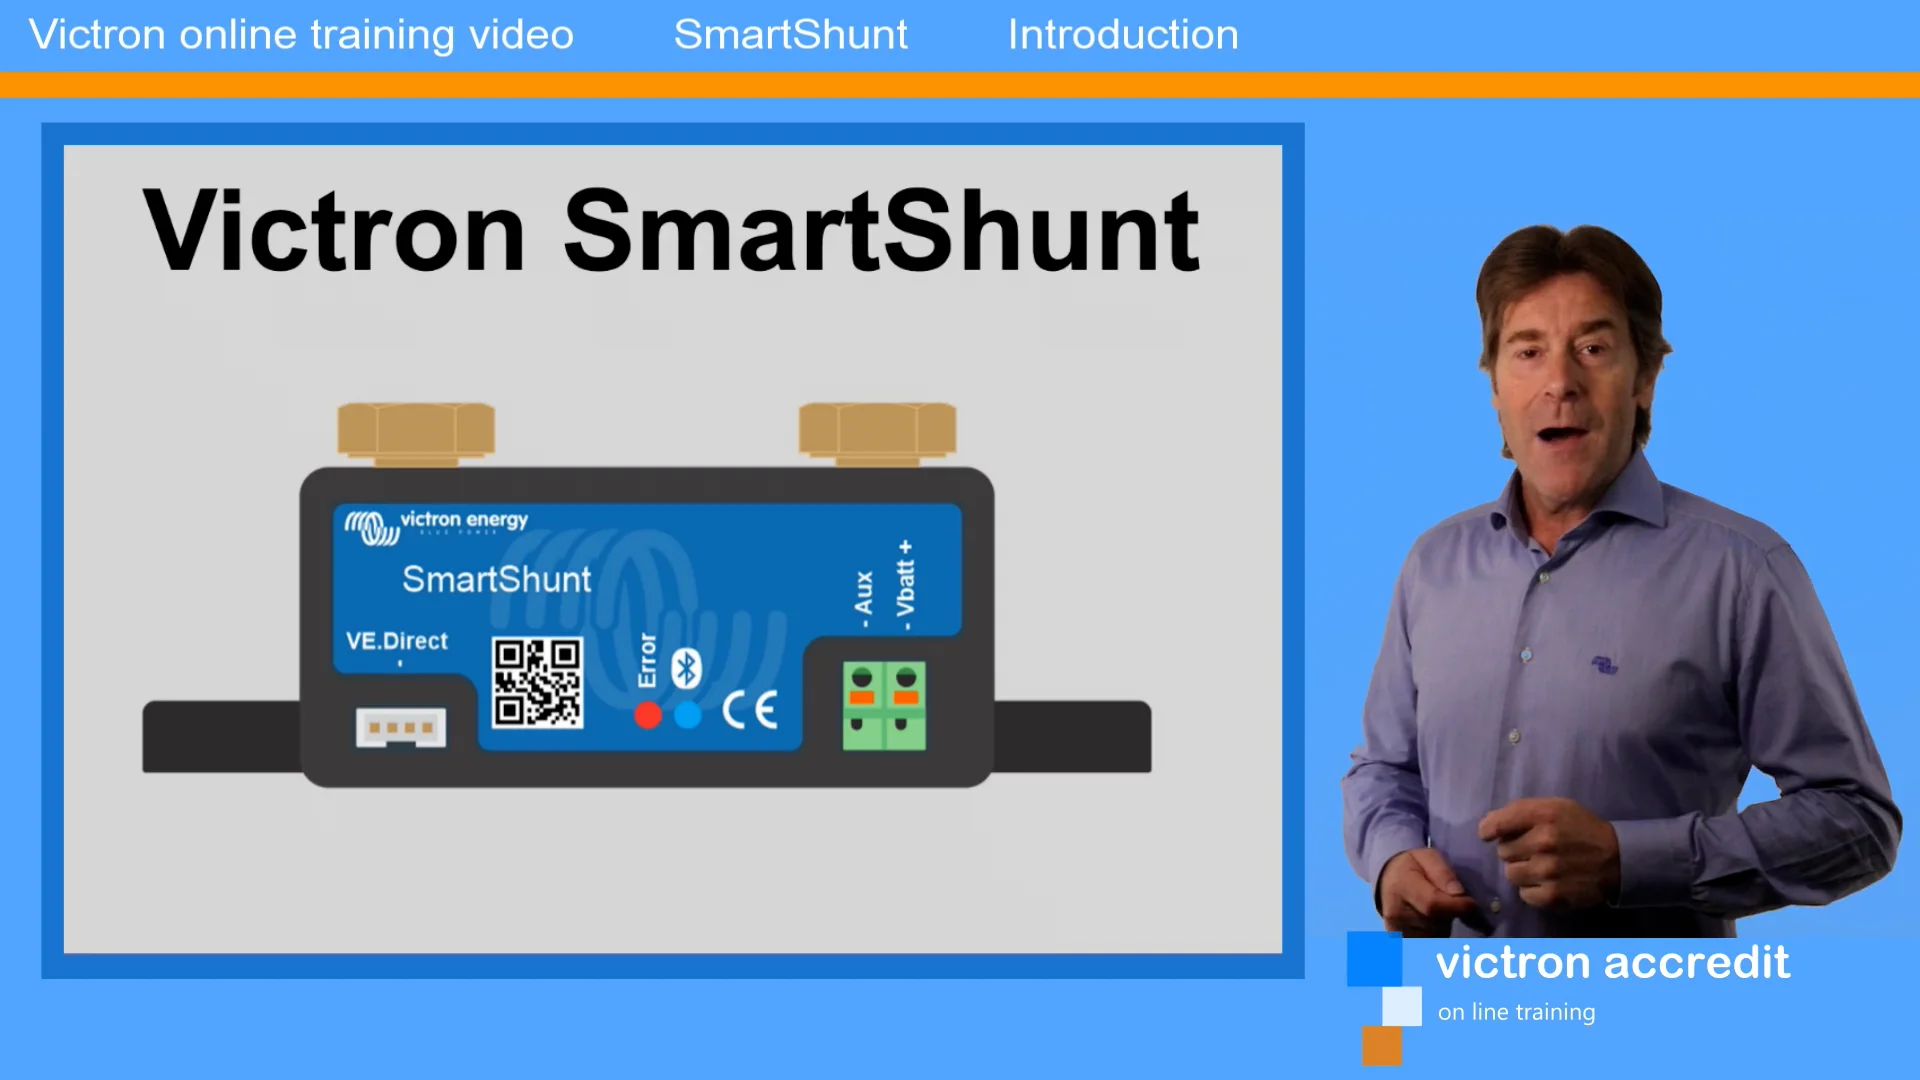 4.4 - Installing a SmartShunt on Vimeo